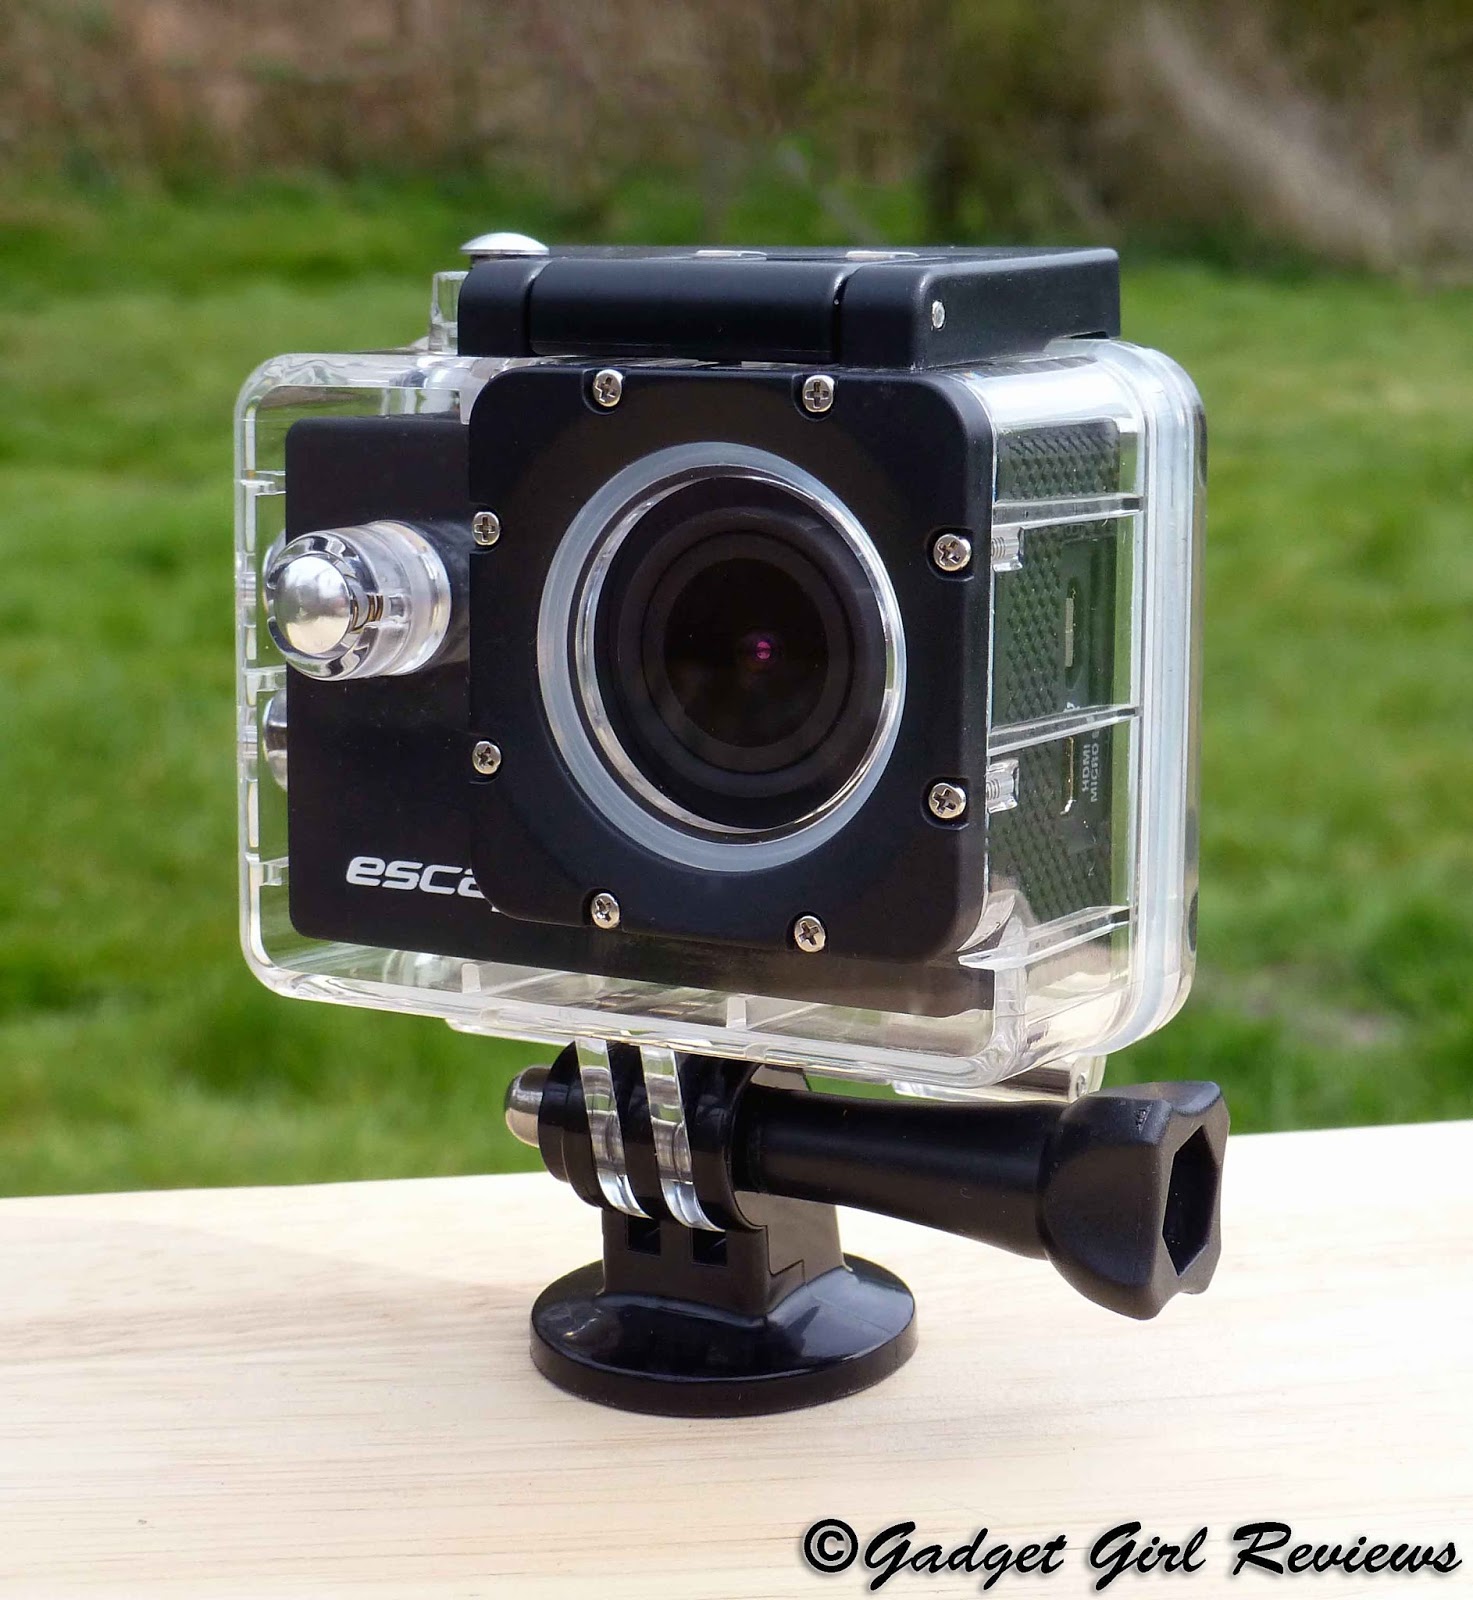 Gadget KitVision Escape HD5W Waterproof HD Action Camera